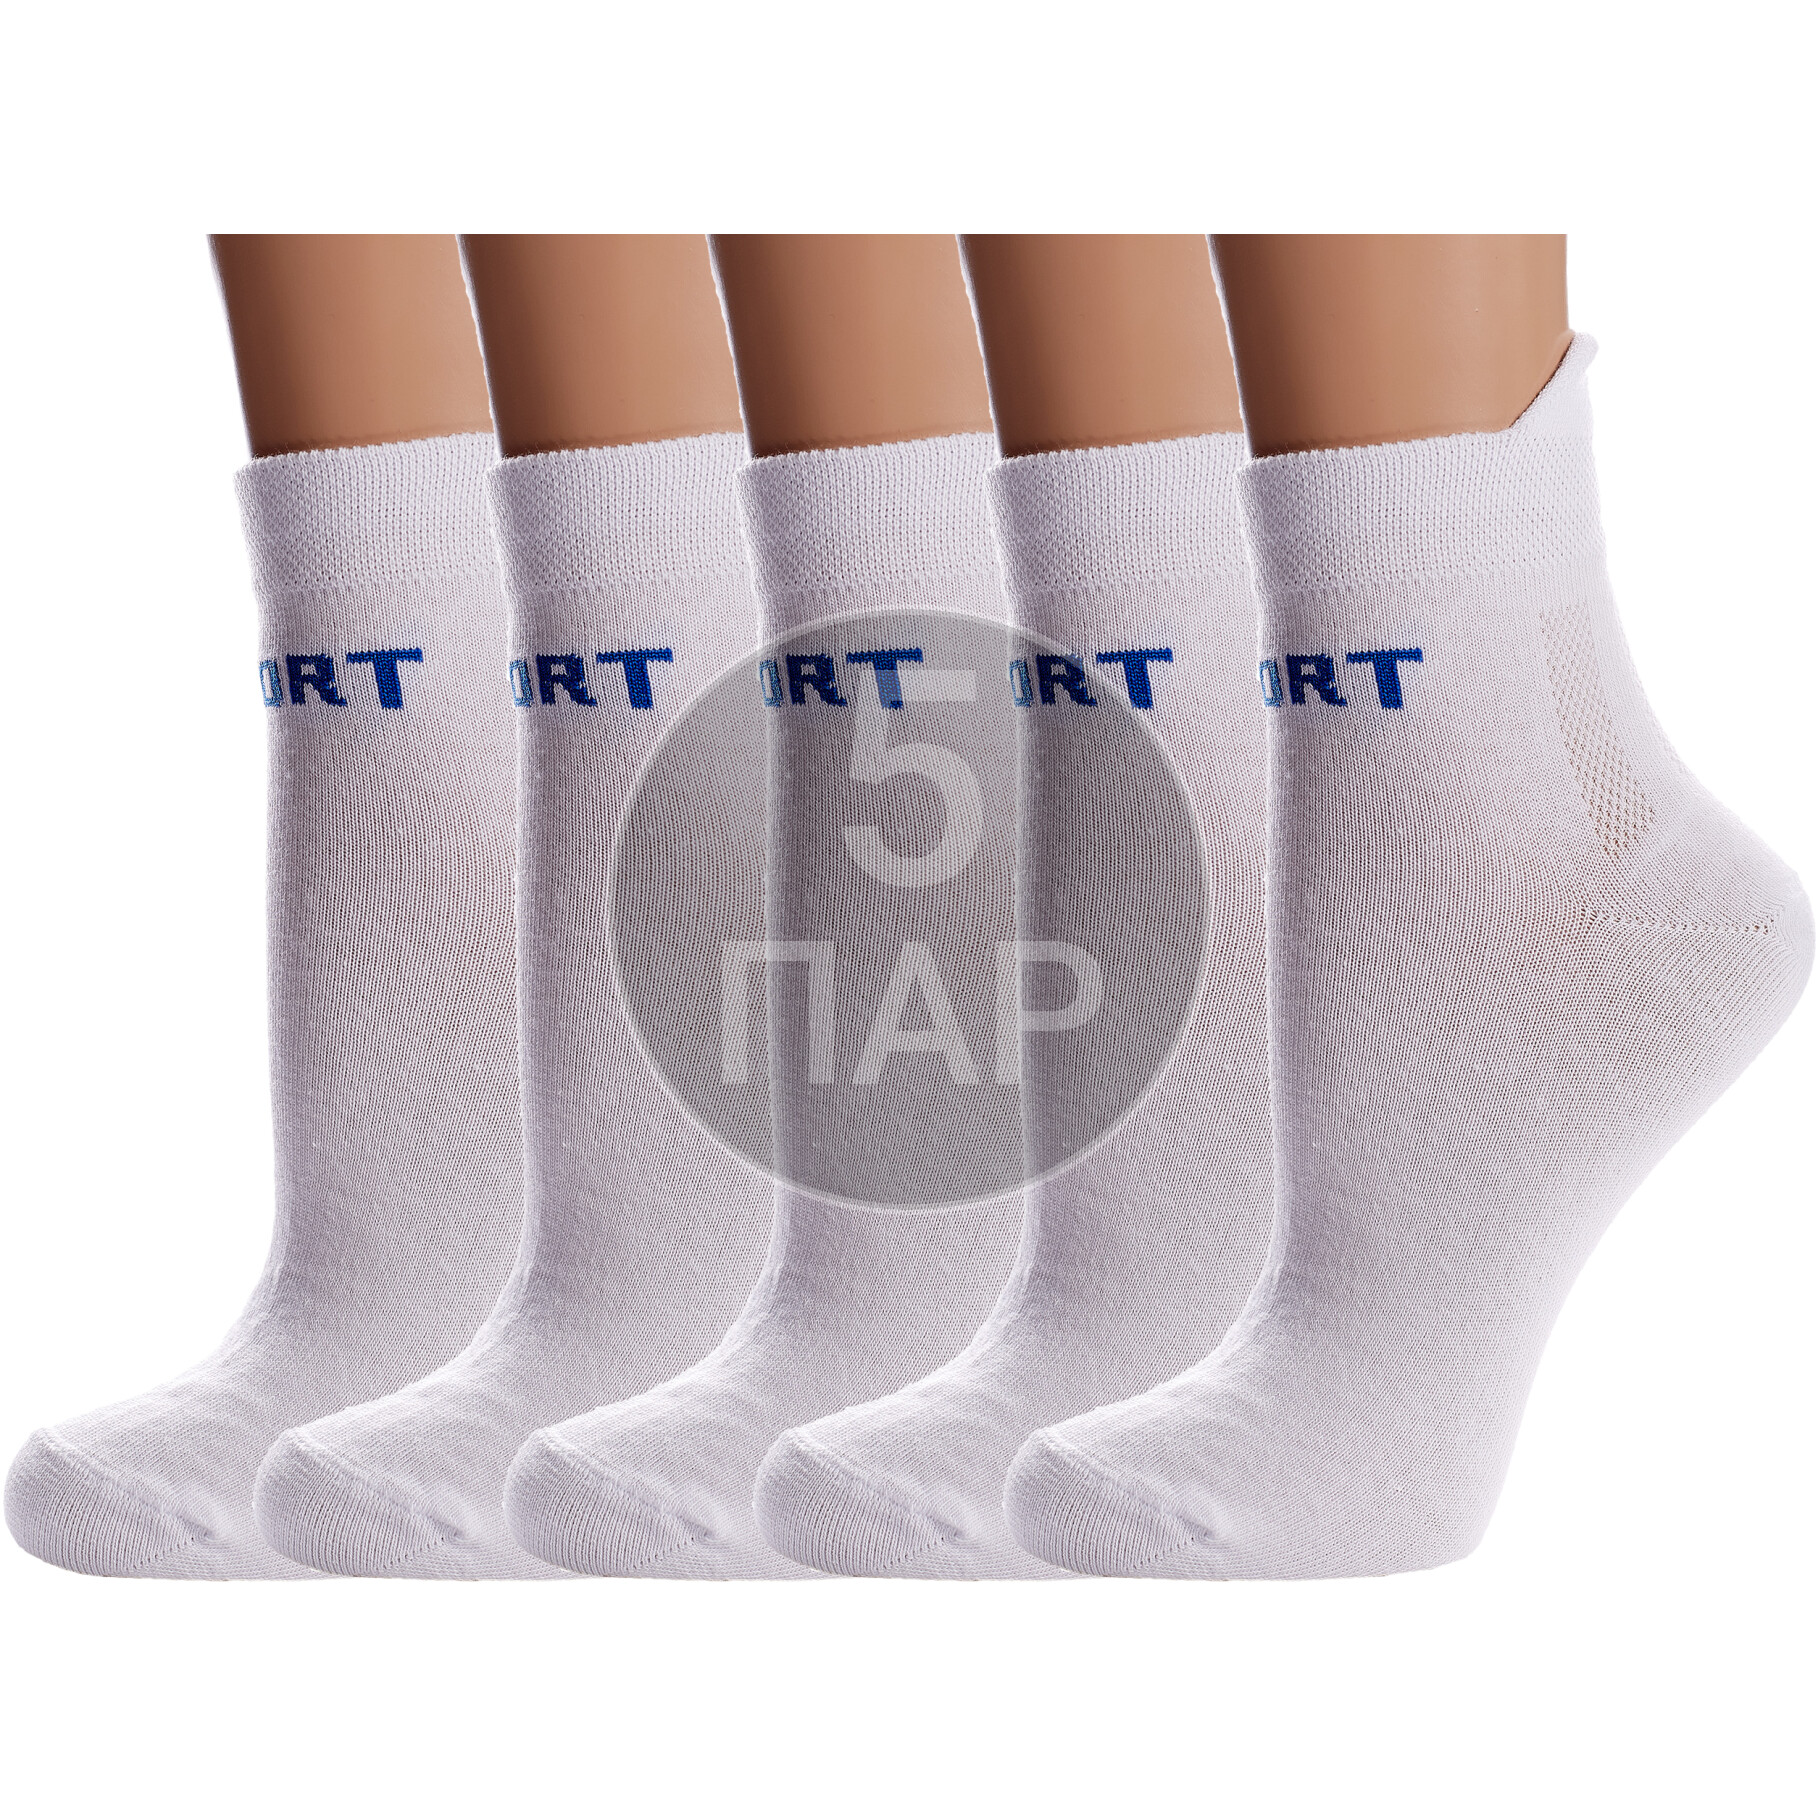 Комплект носков унисекс Para Socks 5-13S2 белых 23, 5 пар